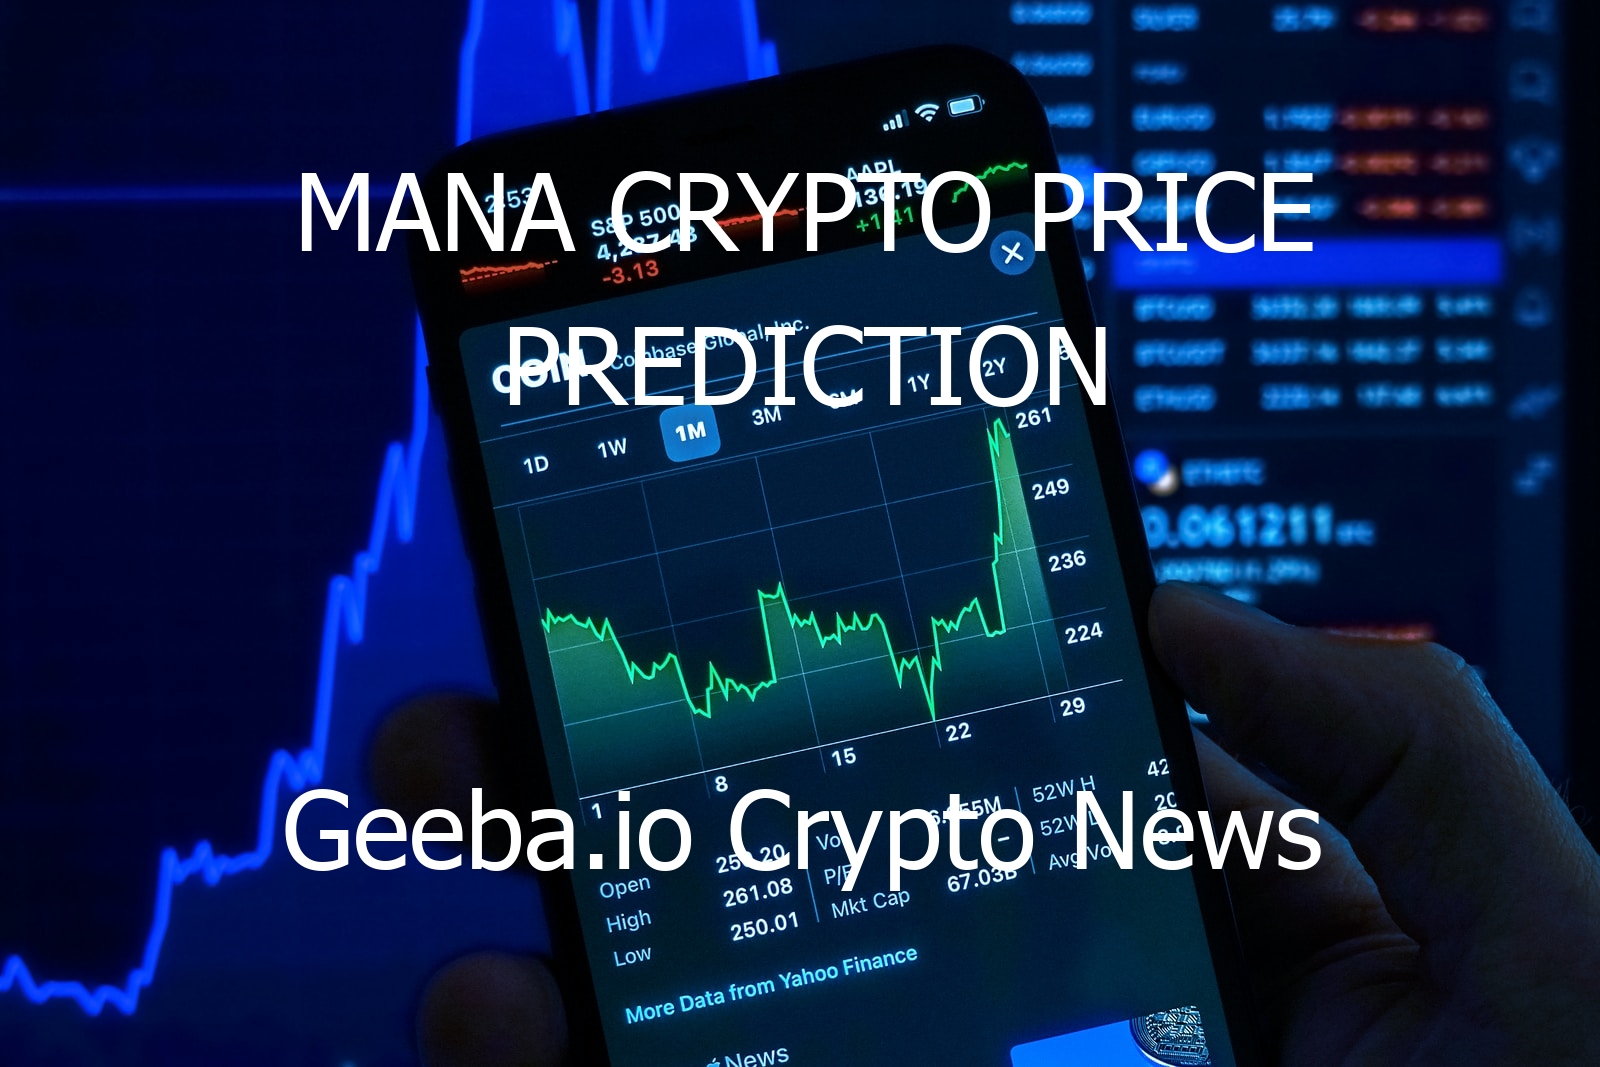 mana crypto price prediction 6704